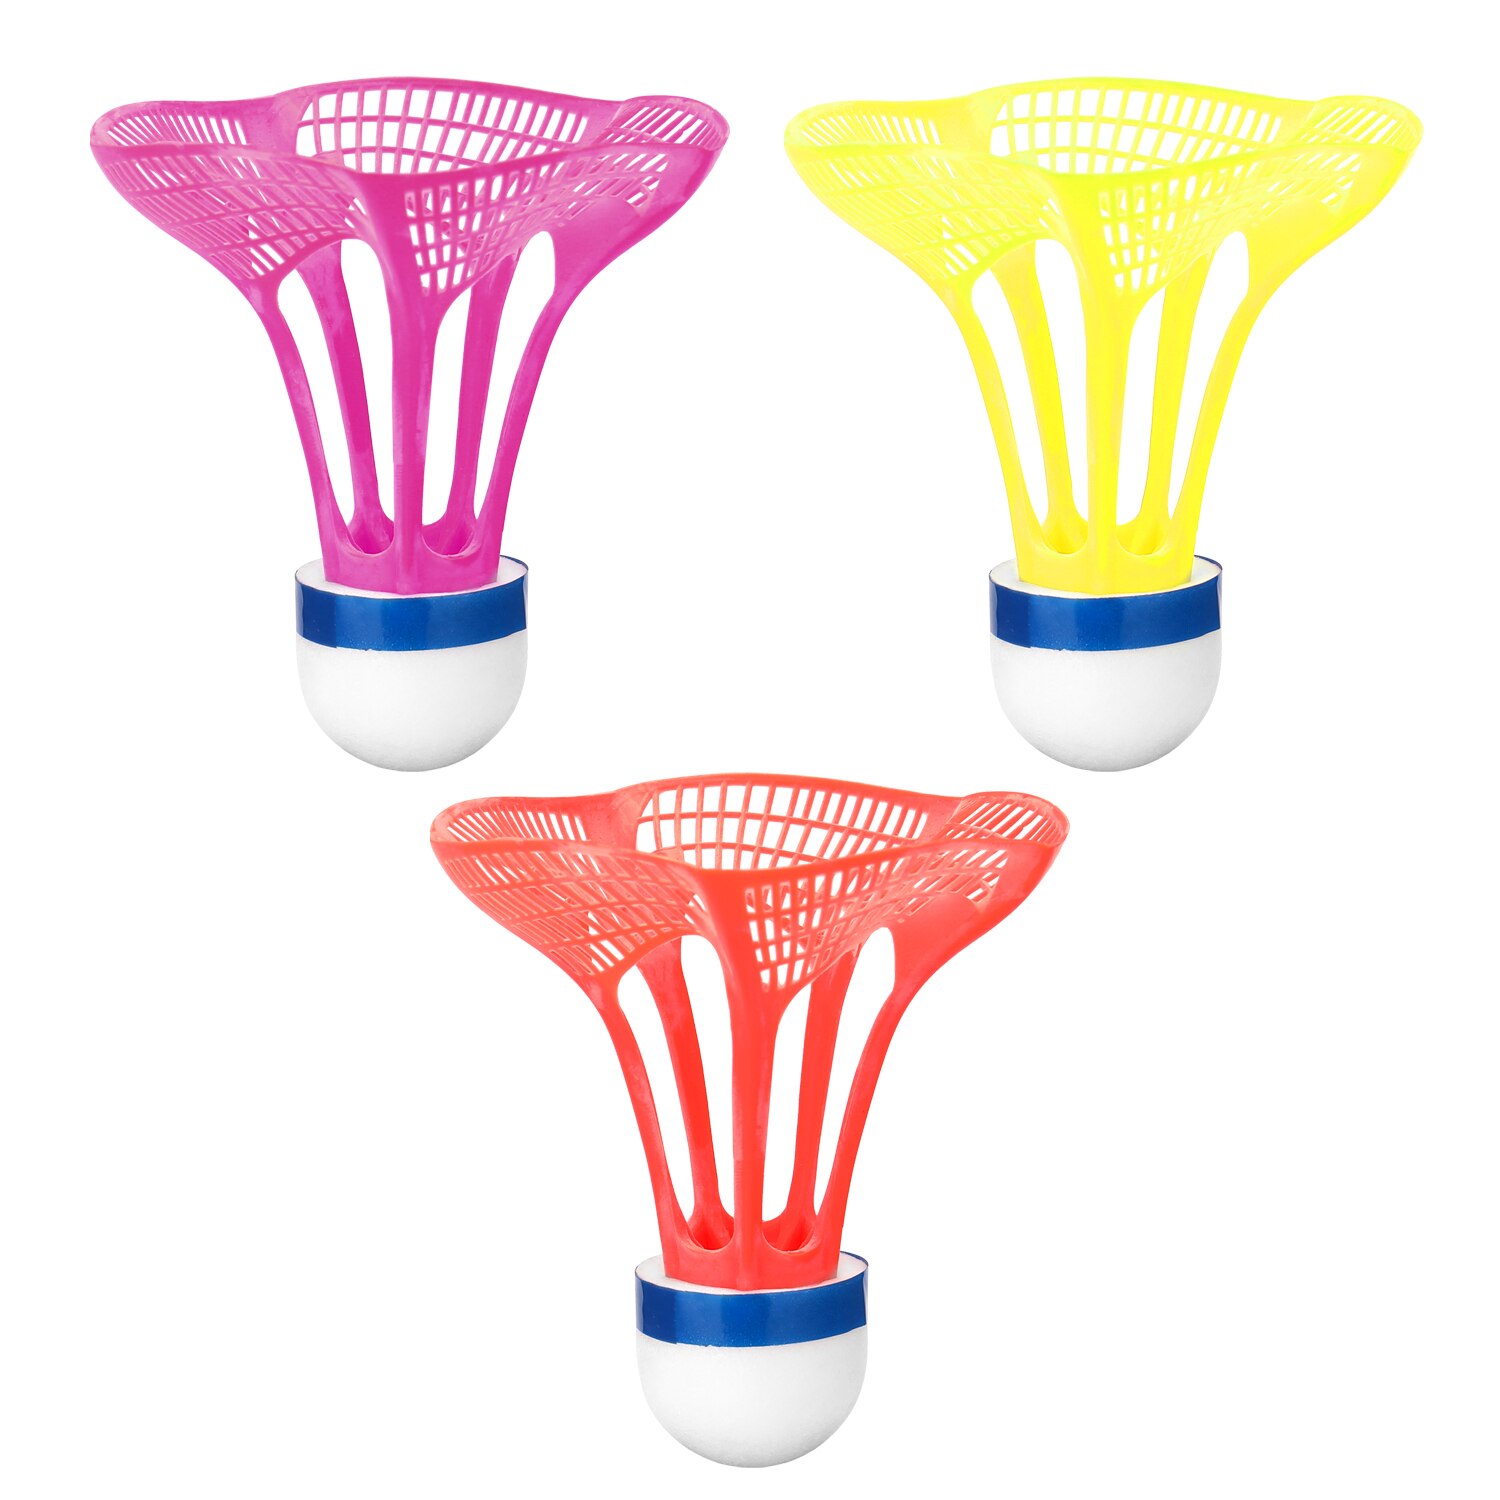 Originale airshuttle udendørs badminton airshuttle plastkugle nylon fjerball kugle stabil modstand 3 stk / pakke: Multi